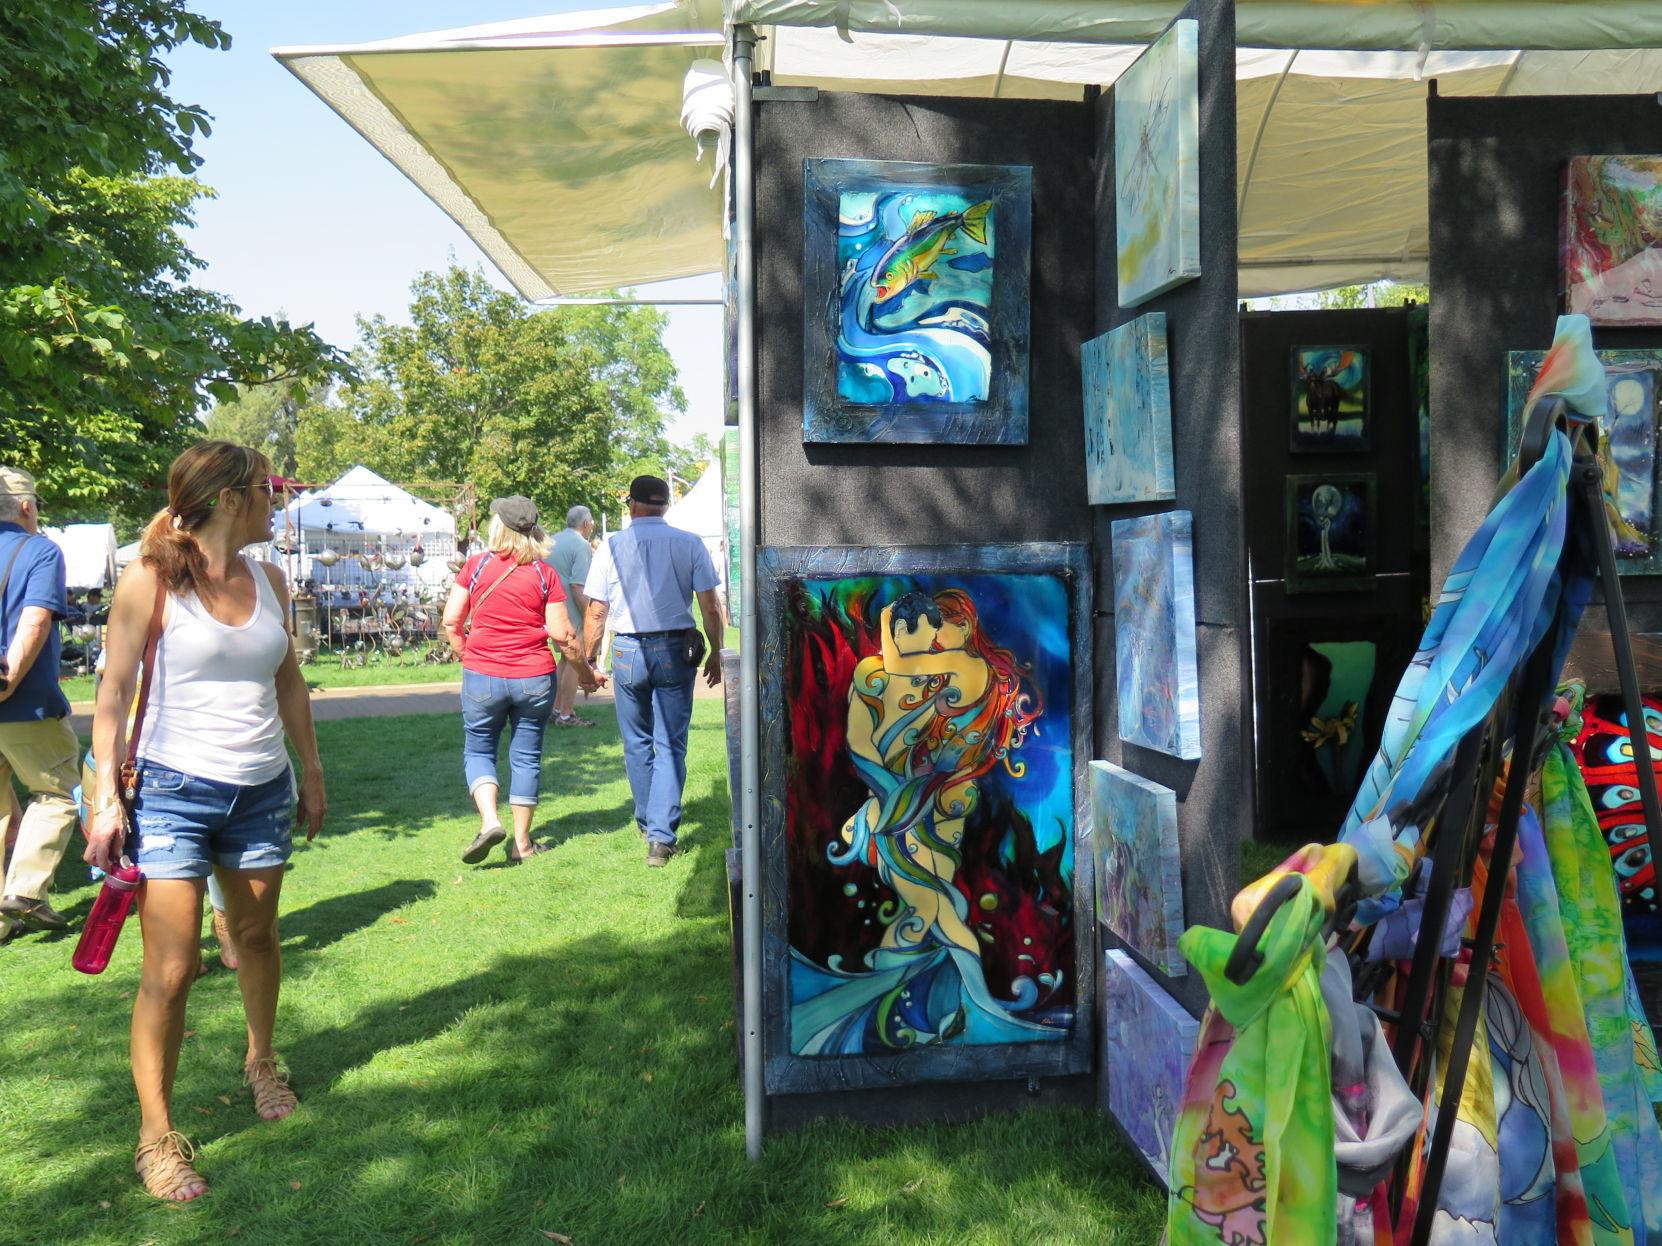 Art in the Park kicks off in Boise for the weekend Eye on Boise